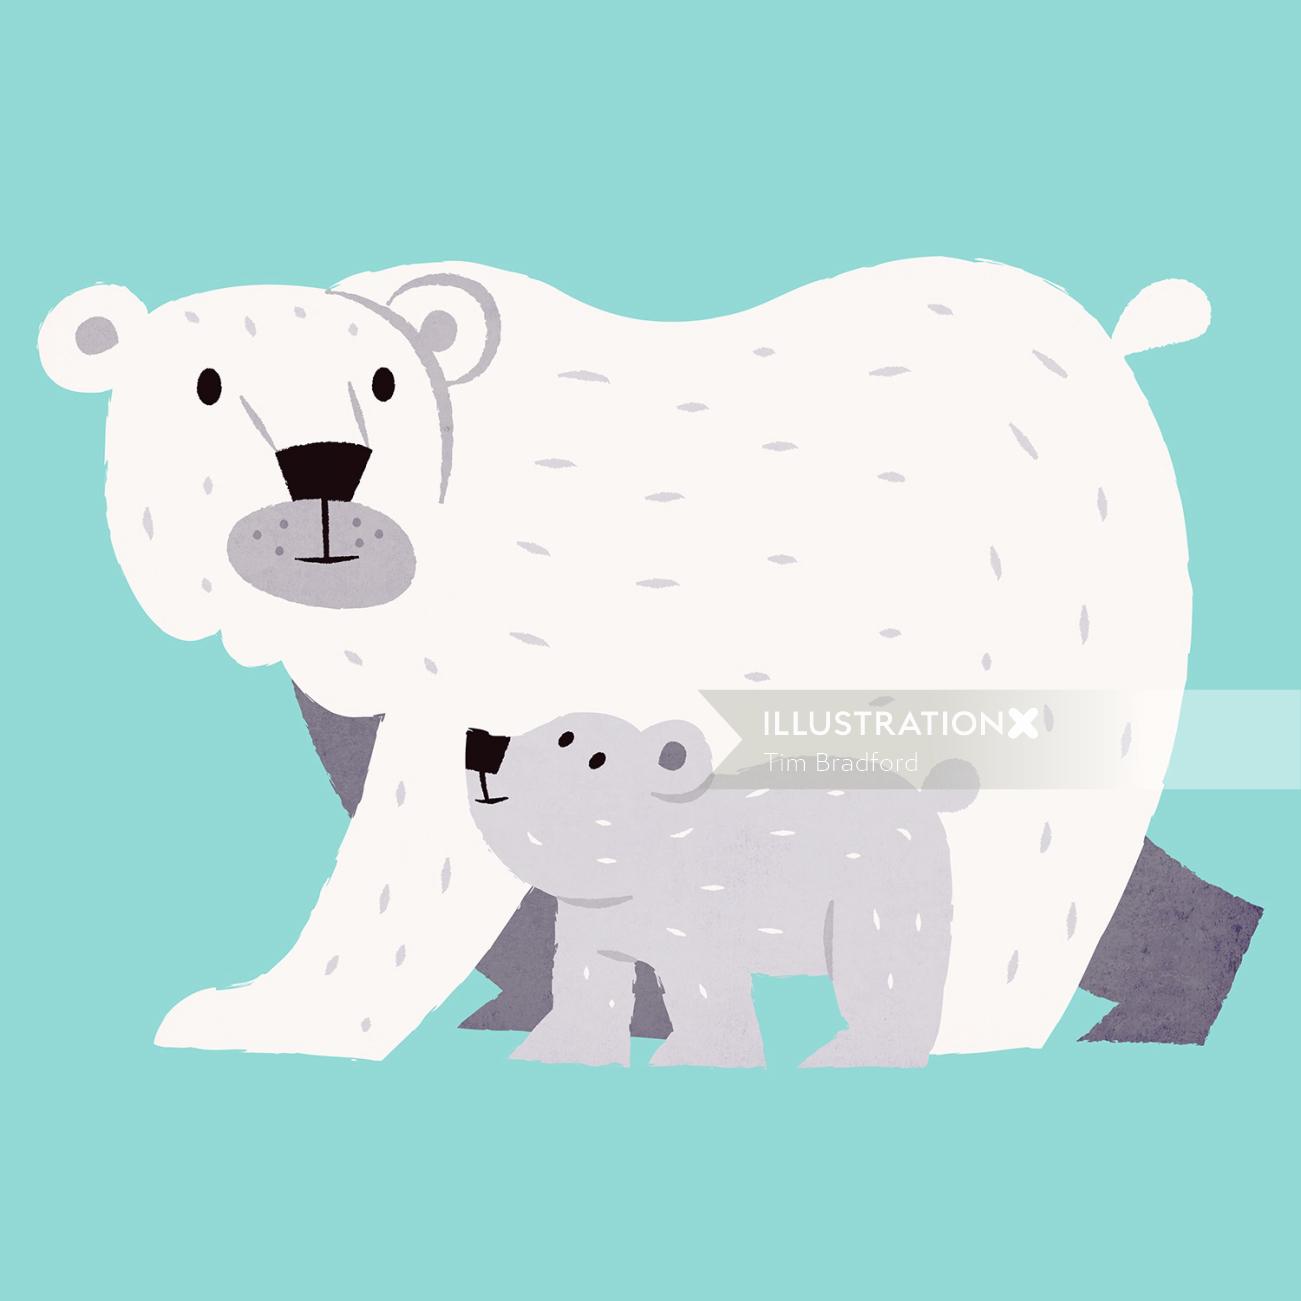 Animals illustration of Bear and Cub